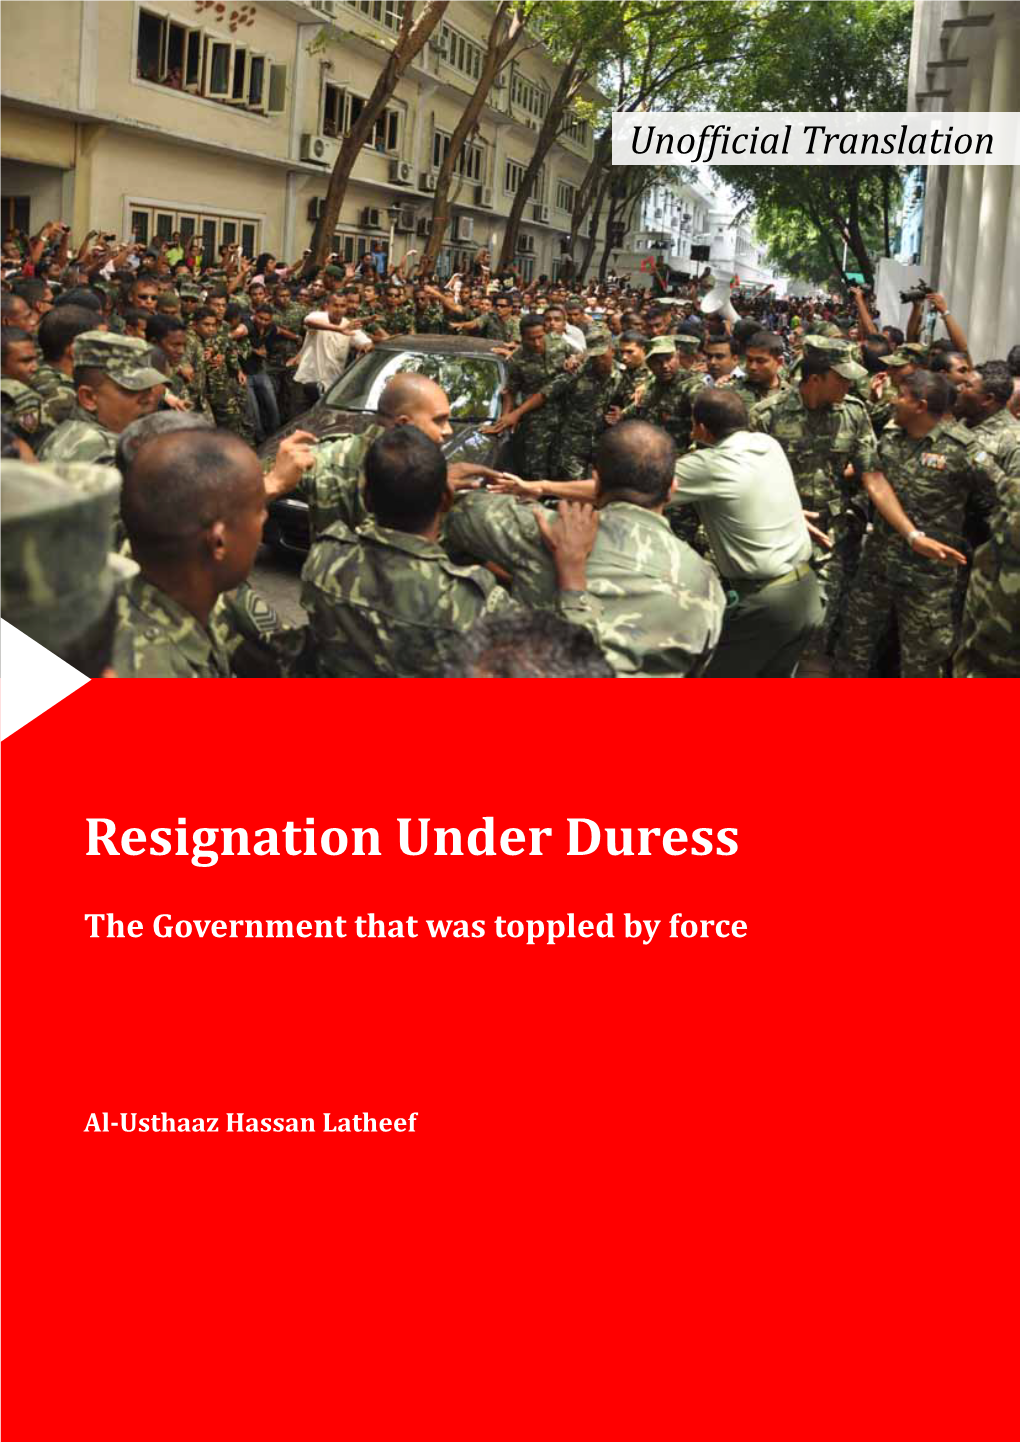 Resignation Under Duress, by Hassan Latheef